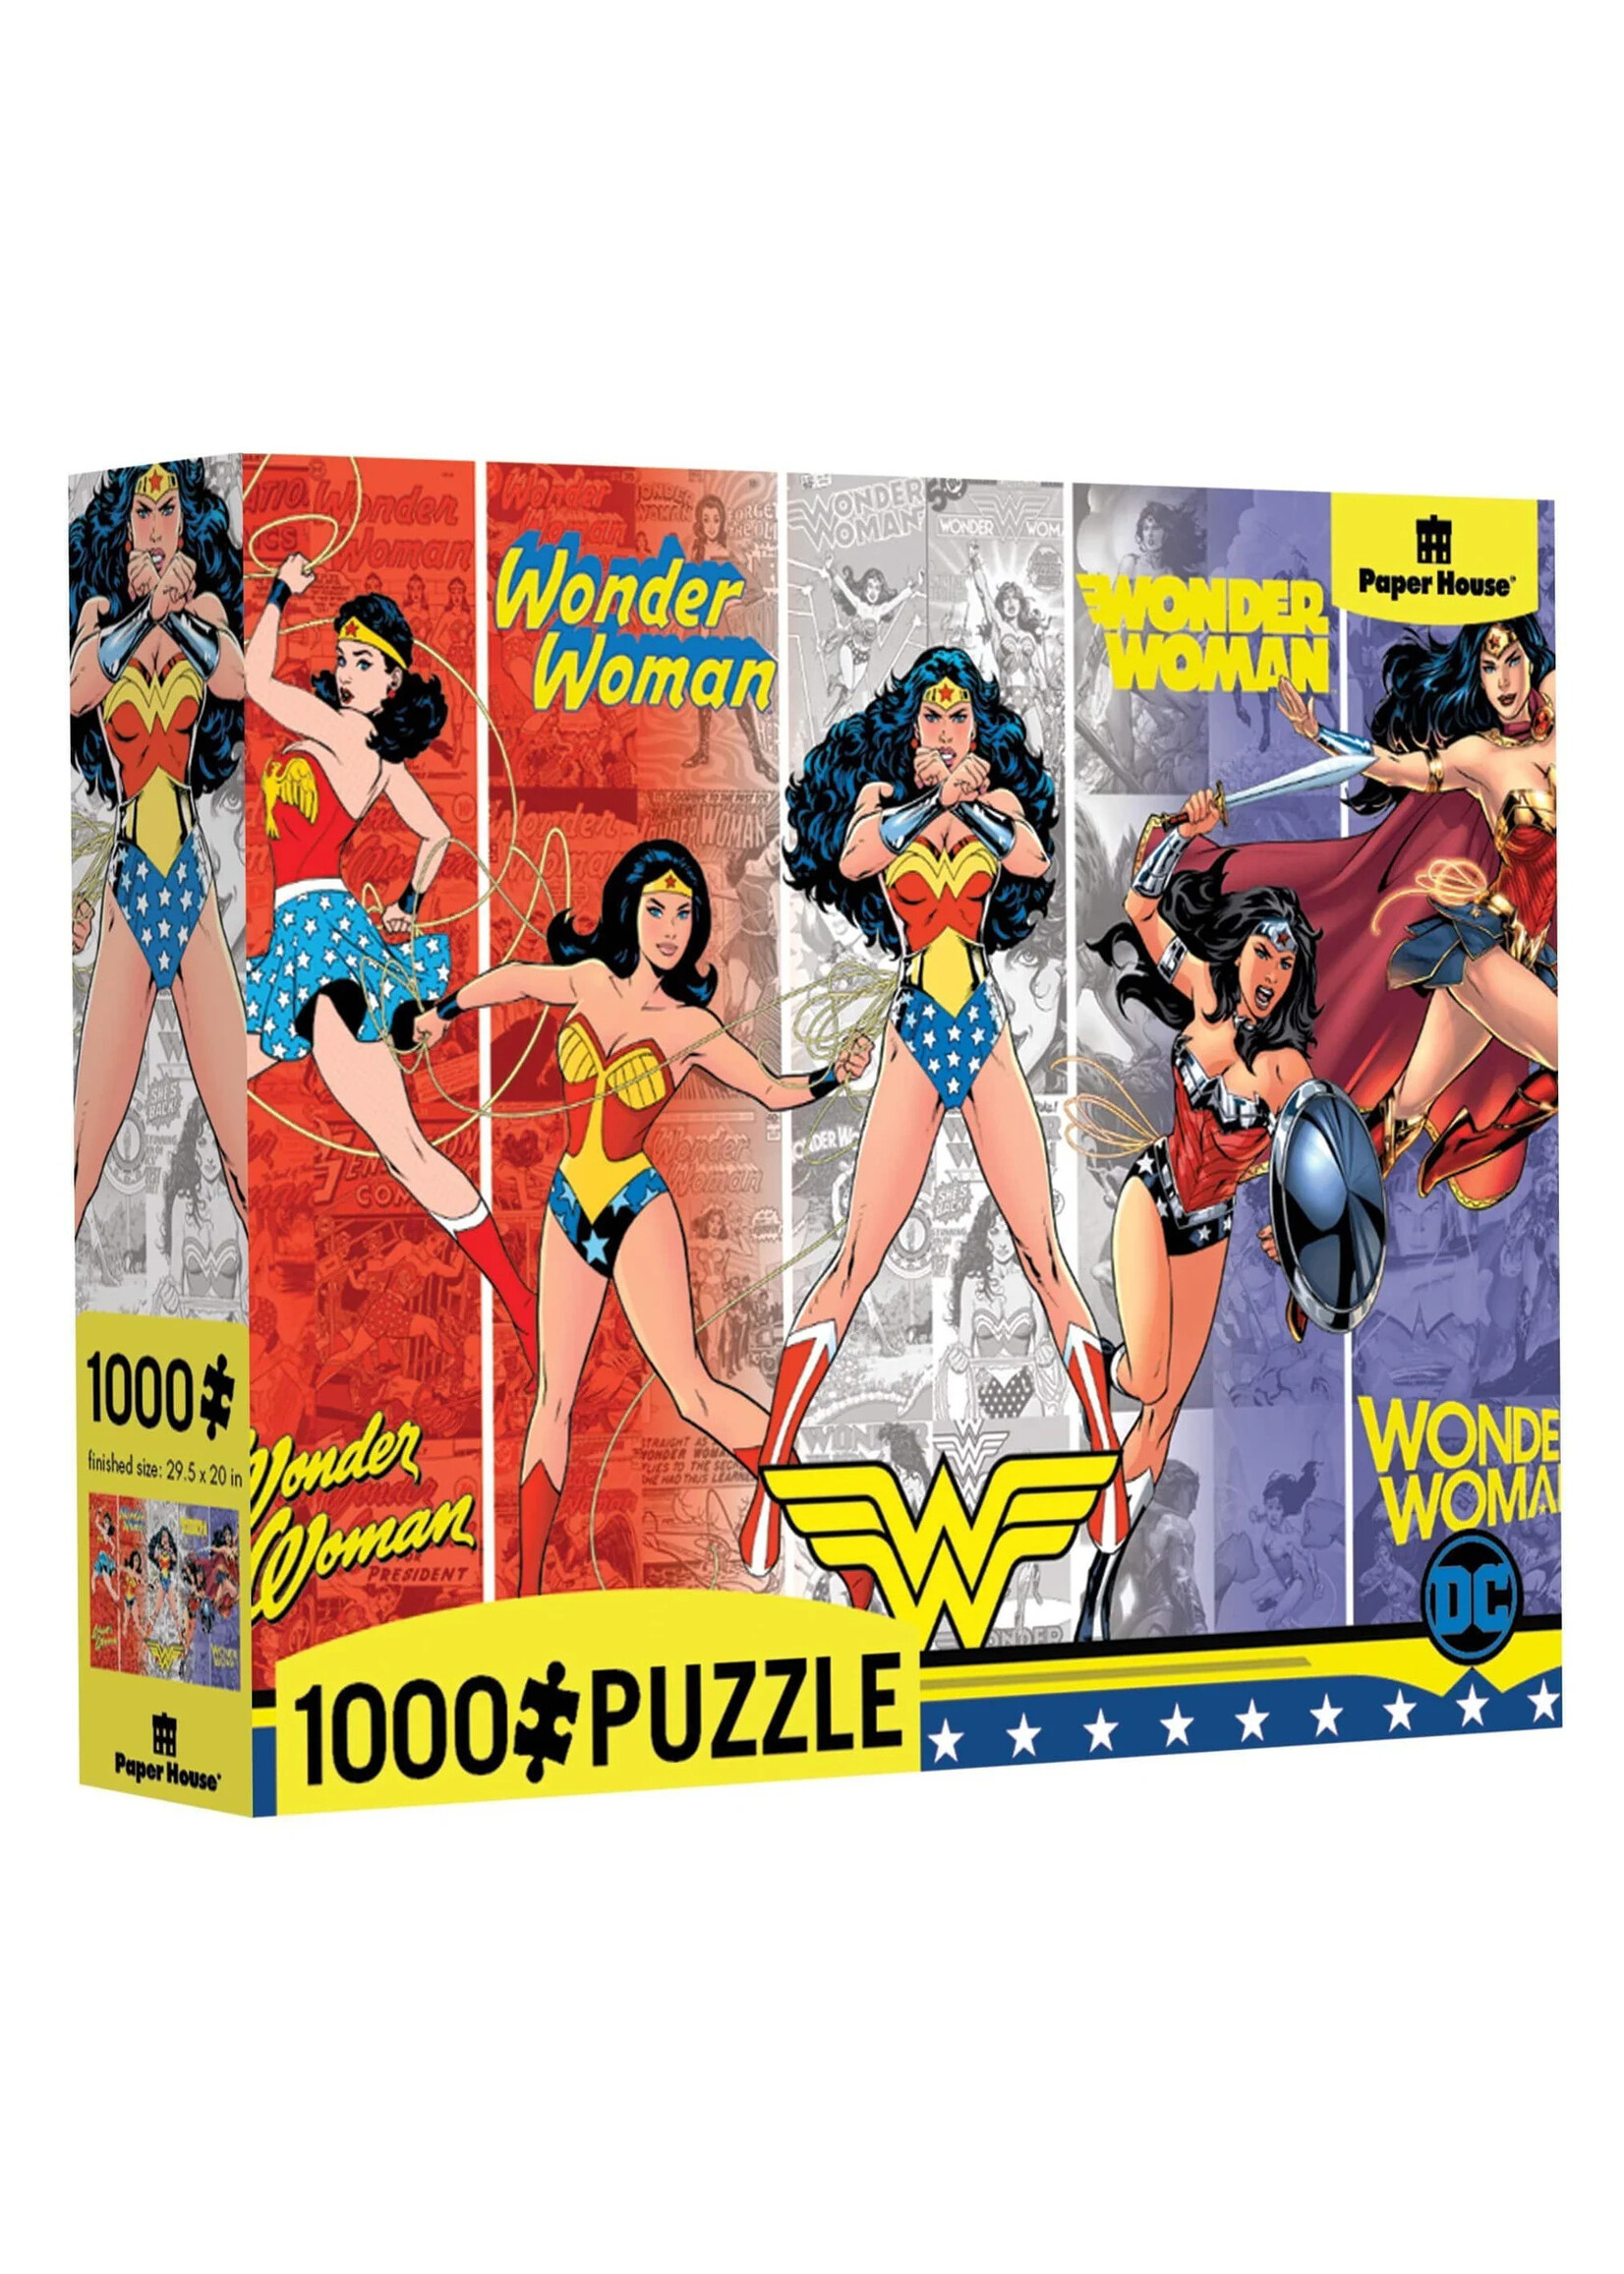 Paper house productions Wonder Woman Generations Puzzle